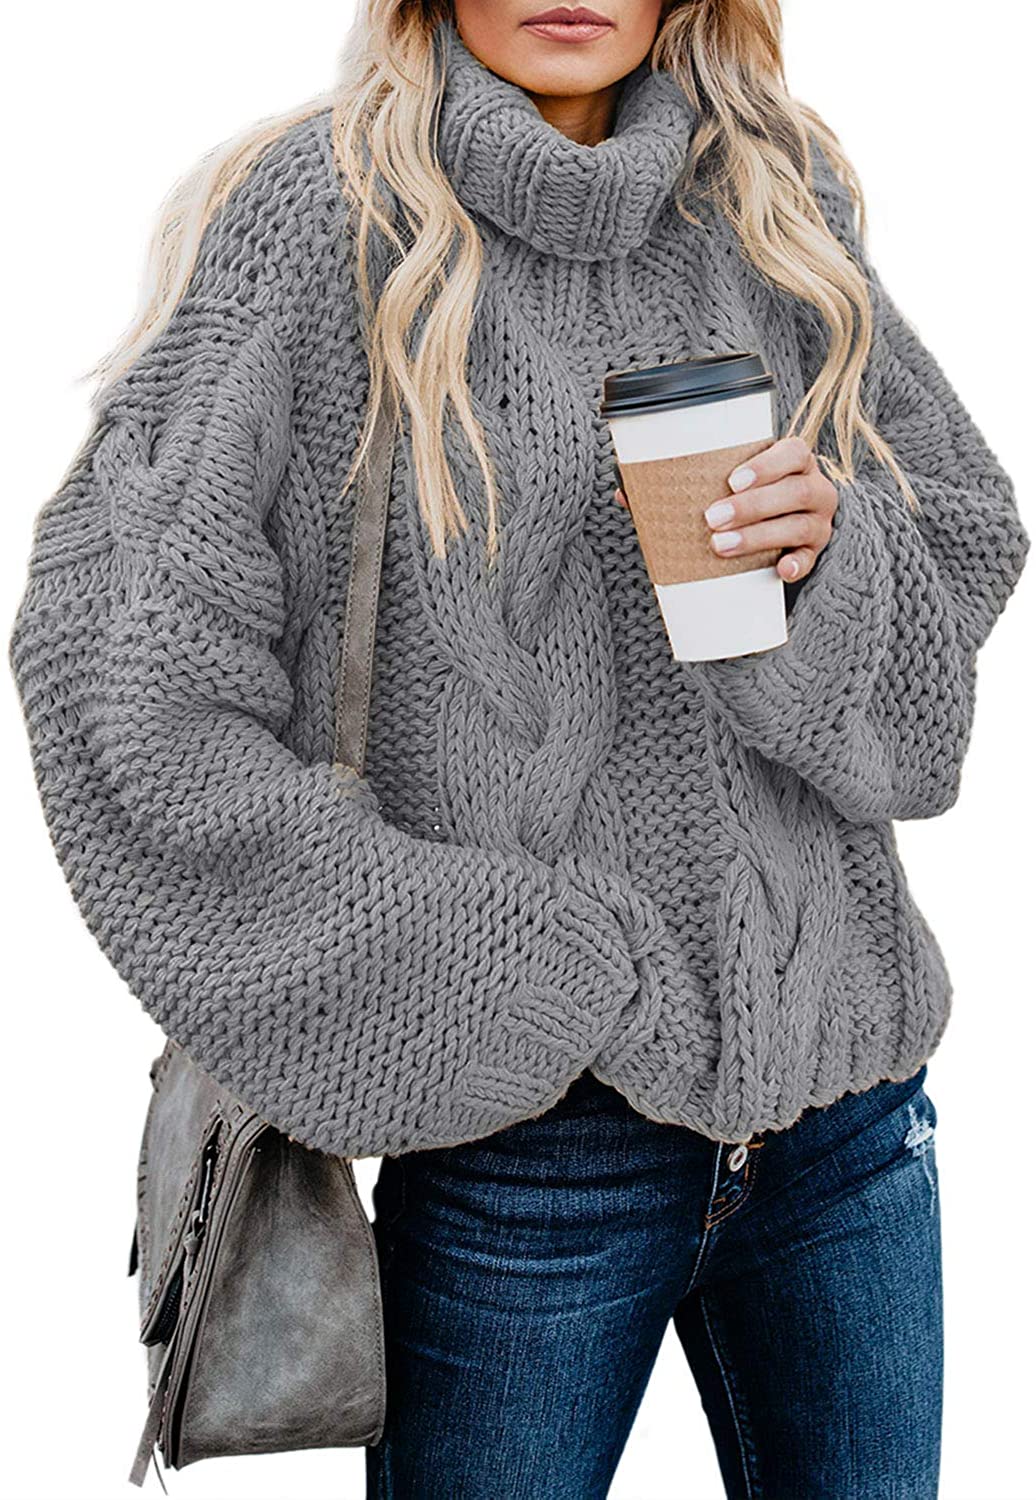 BLENCOT + Women Cable Knit Turtleneck Sweater